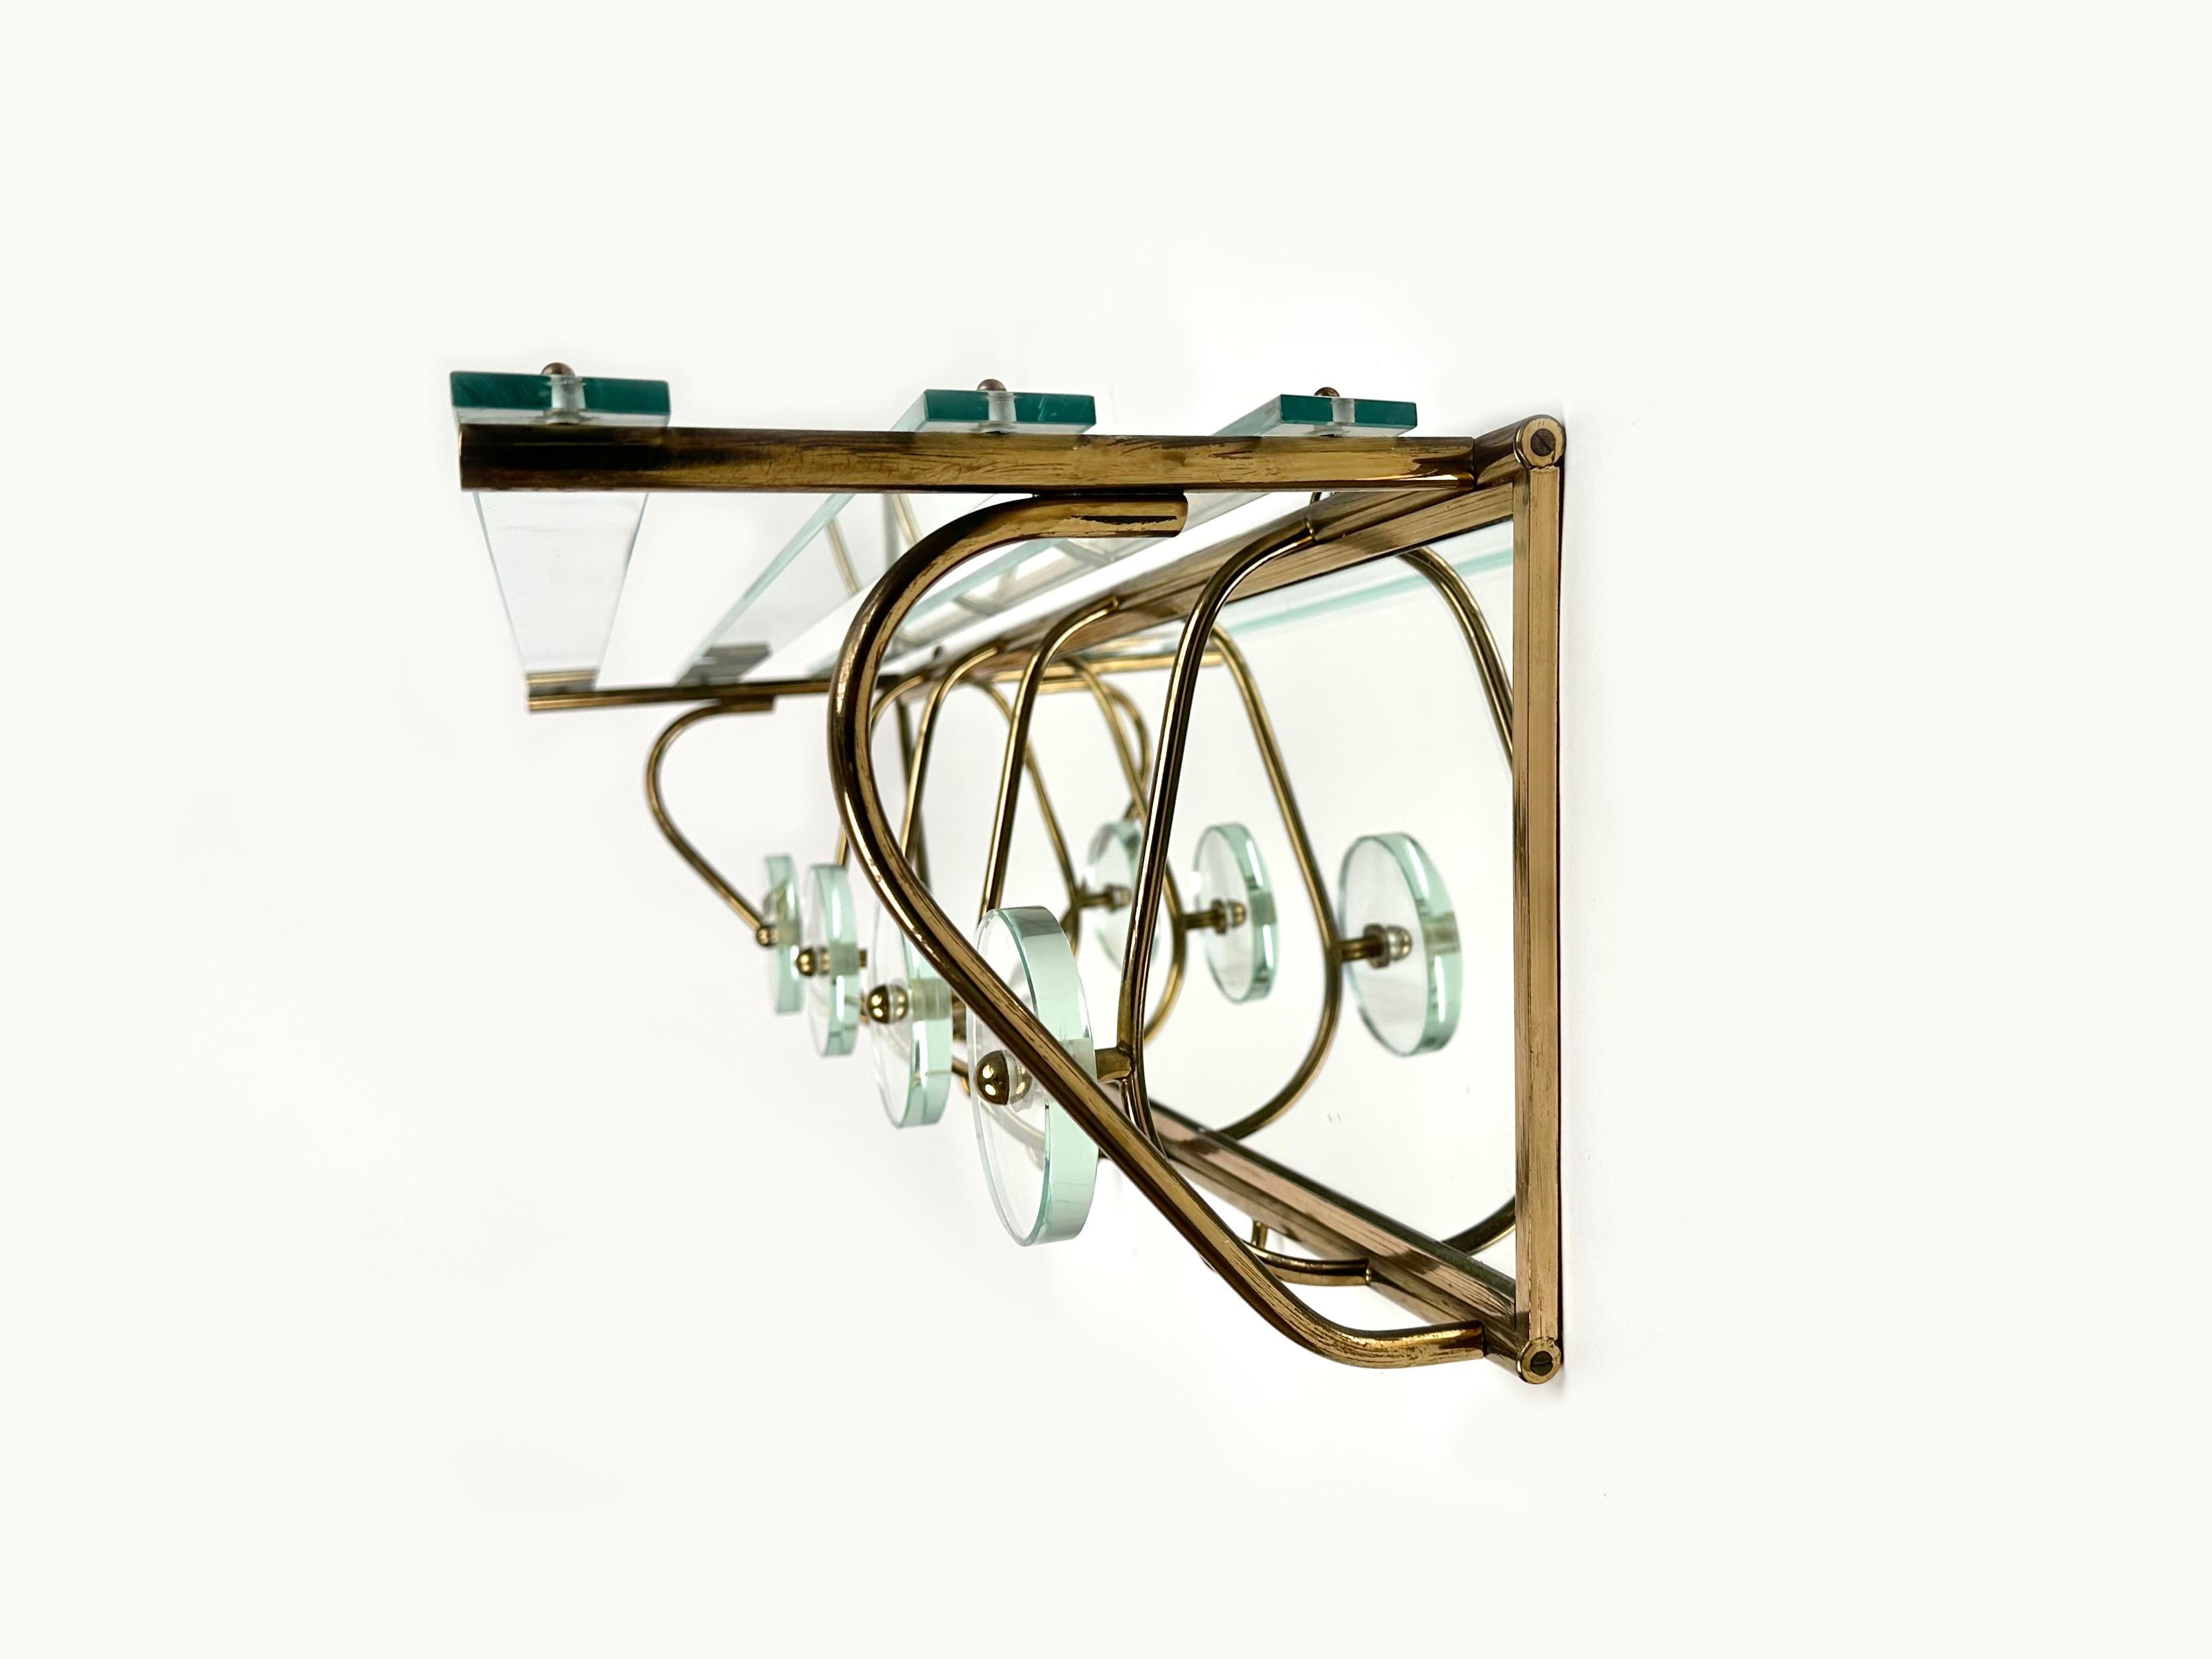 Mid-20th Century Coat Rack Shelf in Mirror, Brass and Glass Fontana Arte style, Italy 1950s